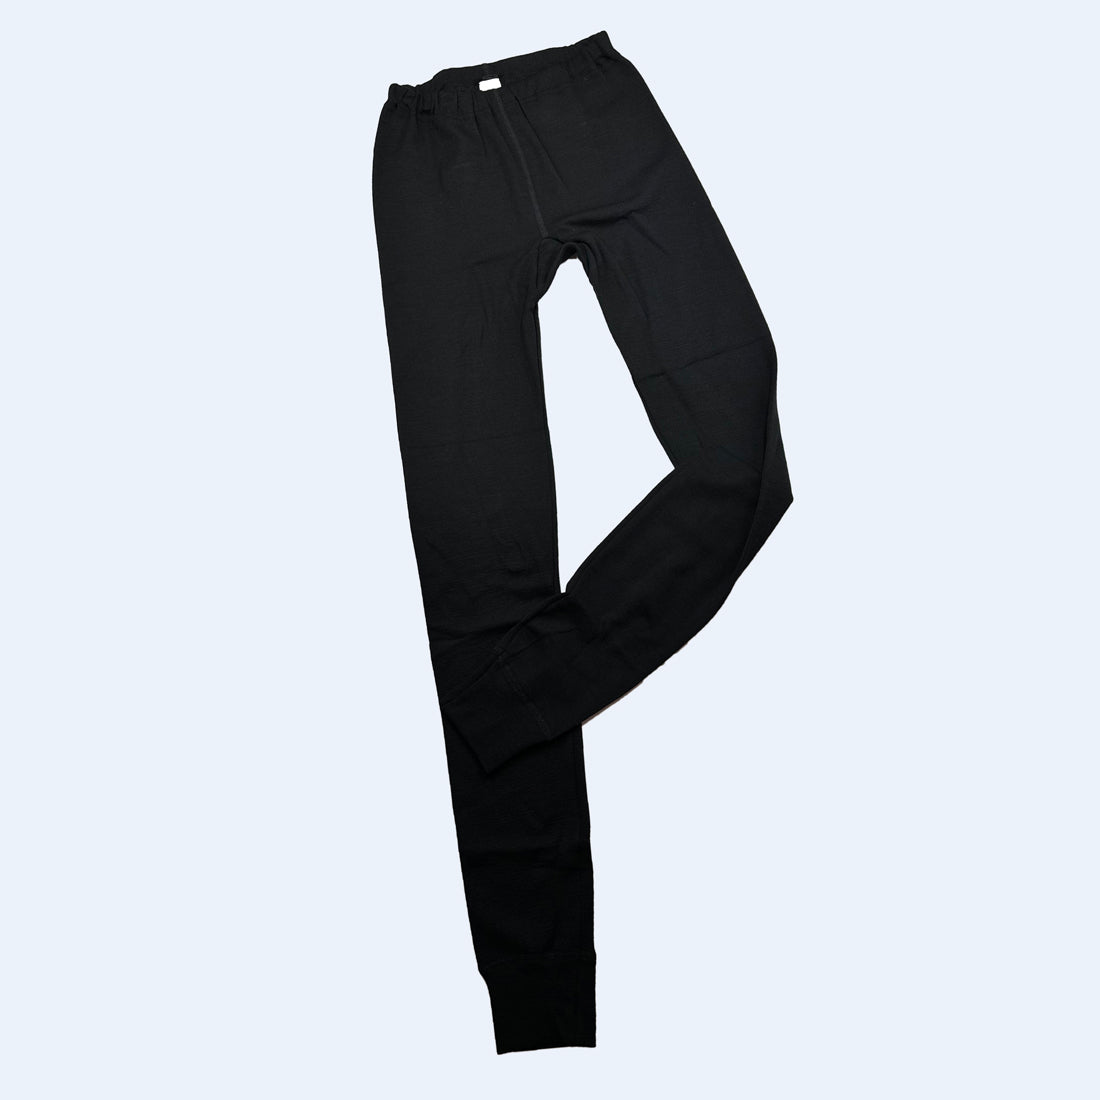 Hocosa Long Underwear Pants in Organic Merino Wool – Danish Woolen